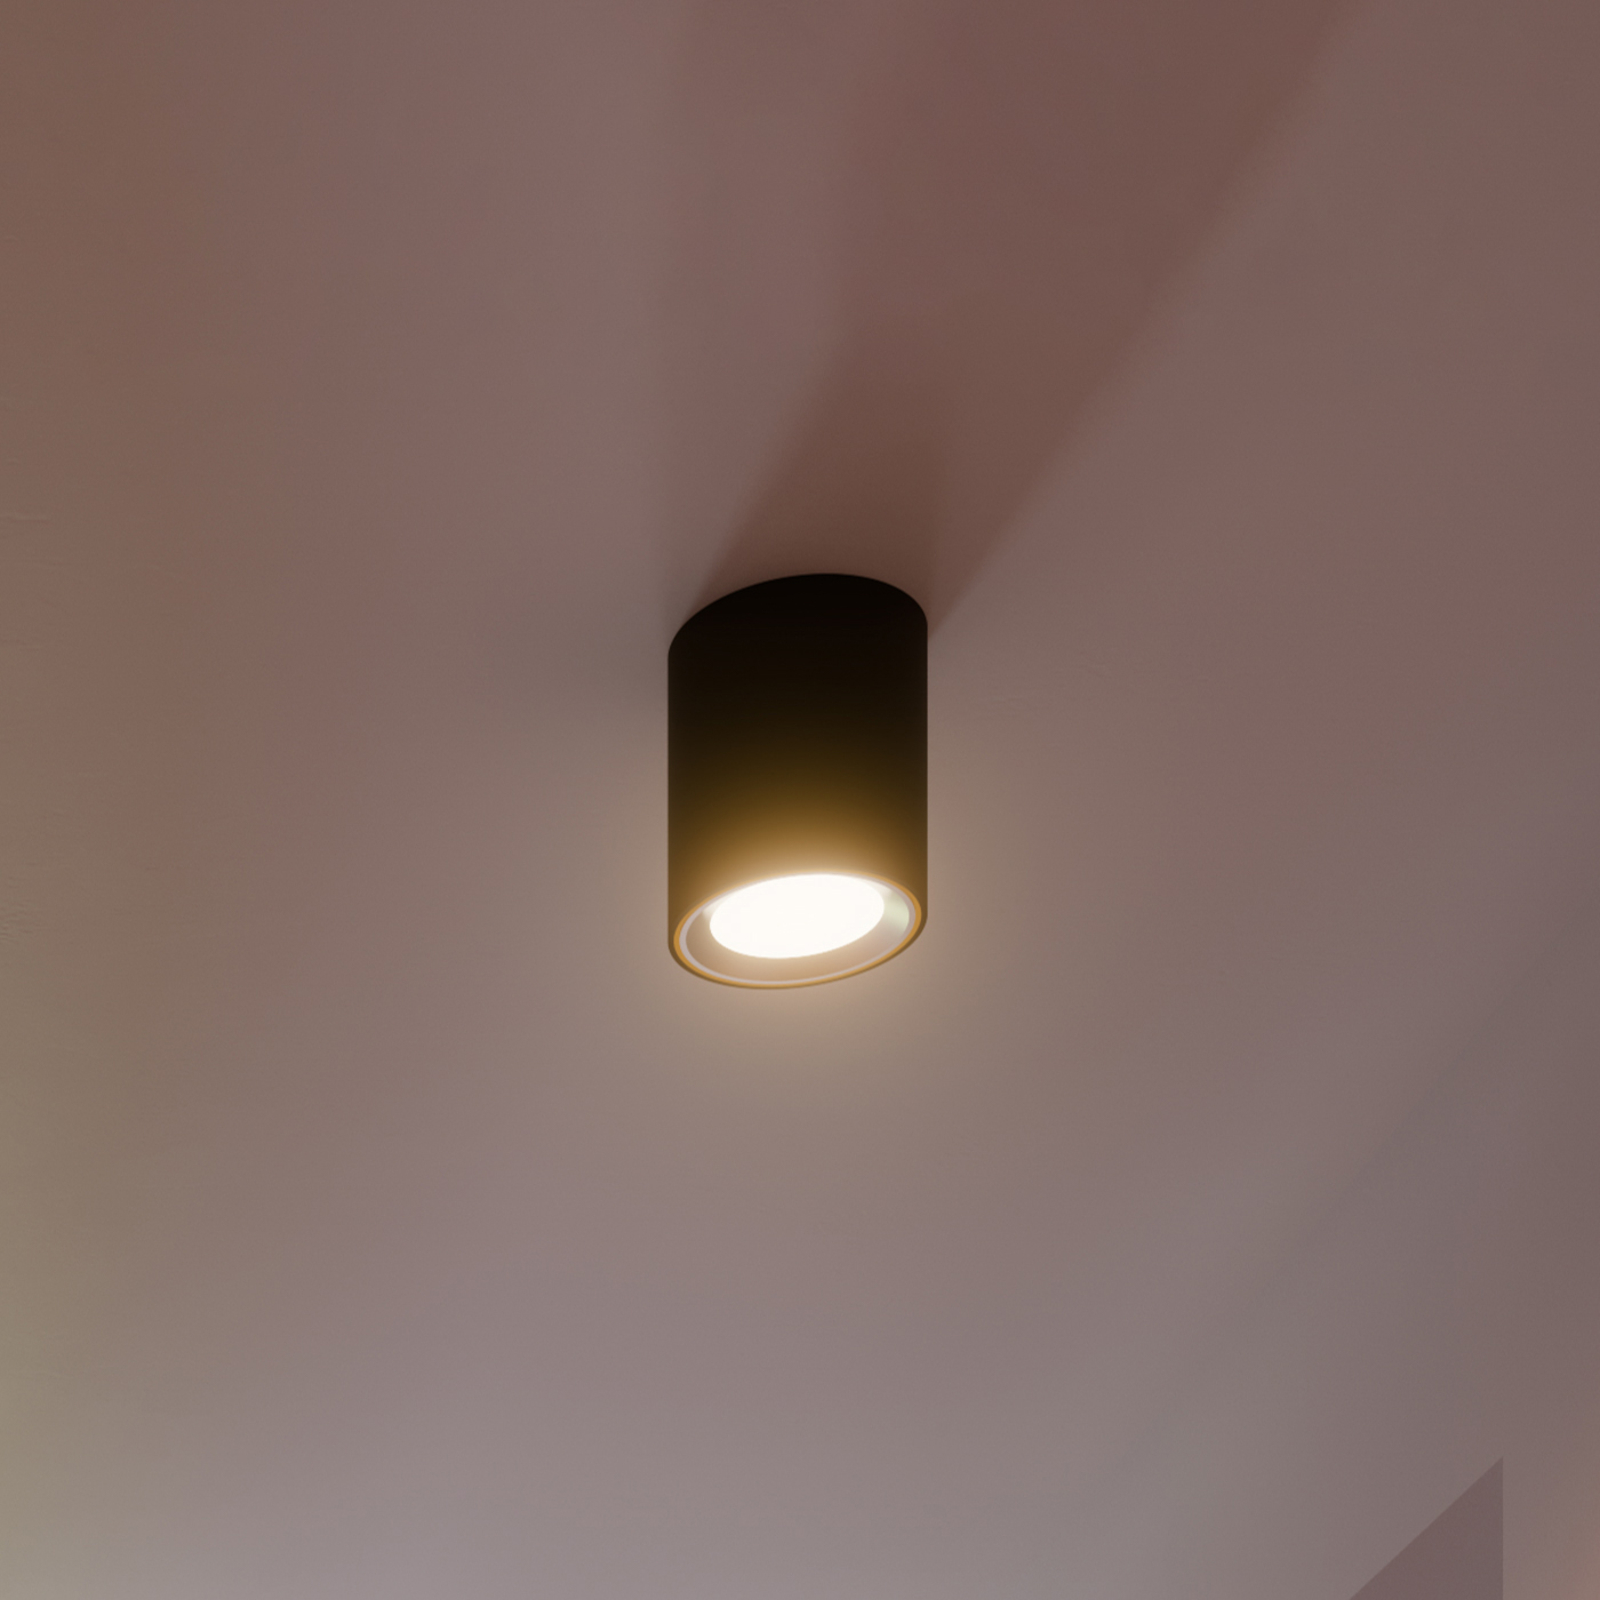 LED downlight de techo Landon Smart, negro, altura 14 cm